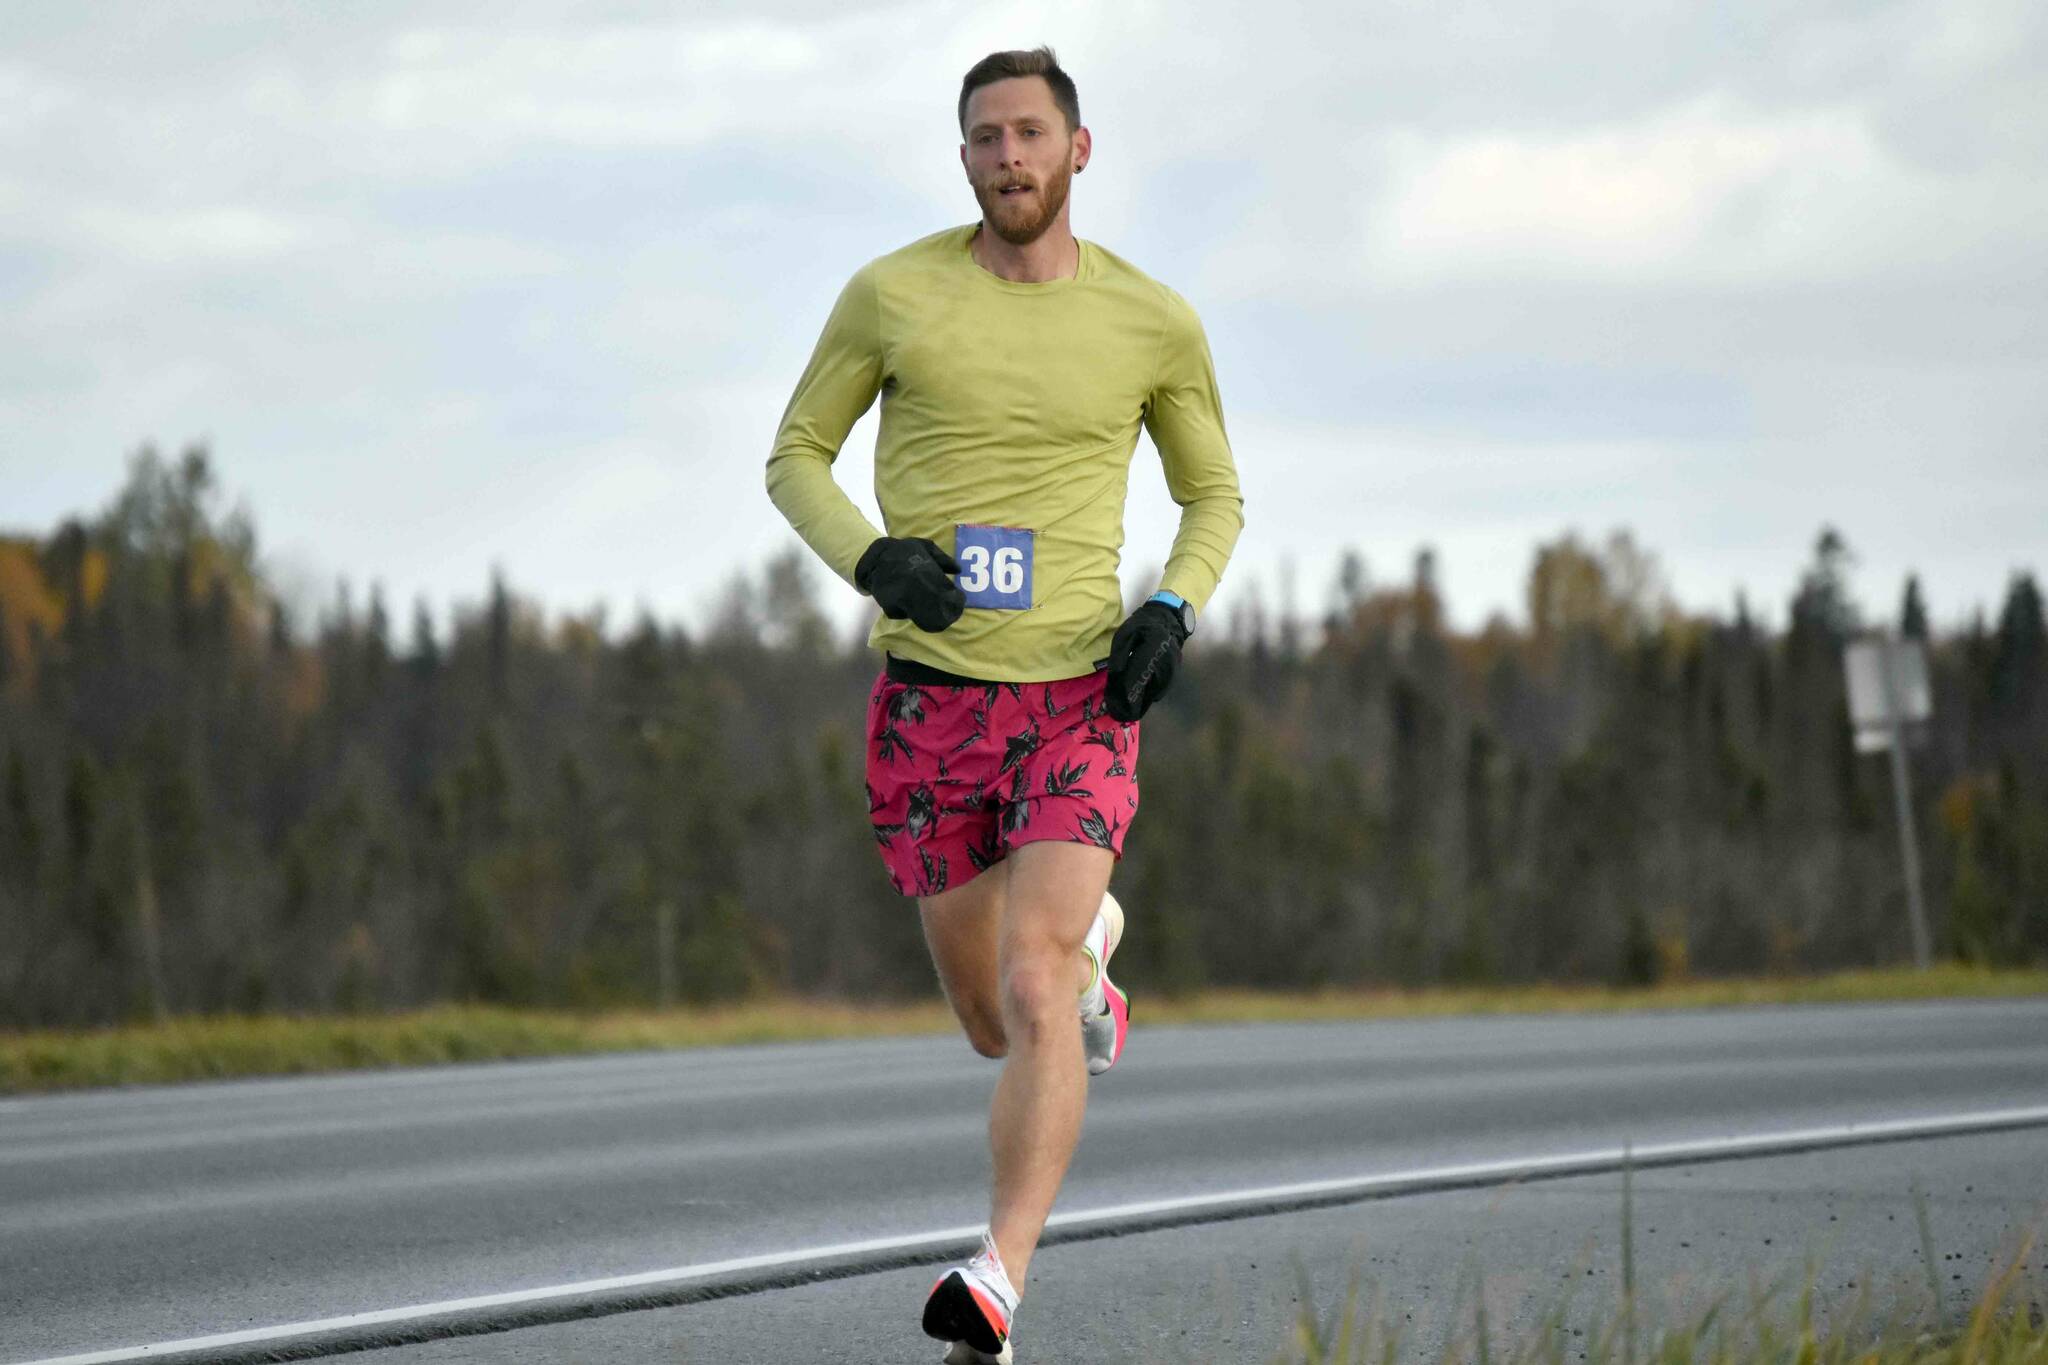 Lars Arneson runs to victory and a new event record in the Kenai River Marathon on Sunday, Sept. 25, 2022, in Kenai, Alaska. (Photo by Jeff Helminiak/Peninsula Clarion)